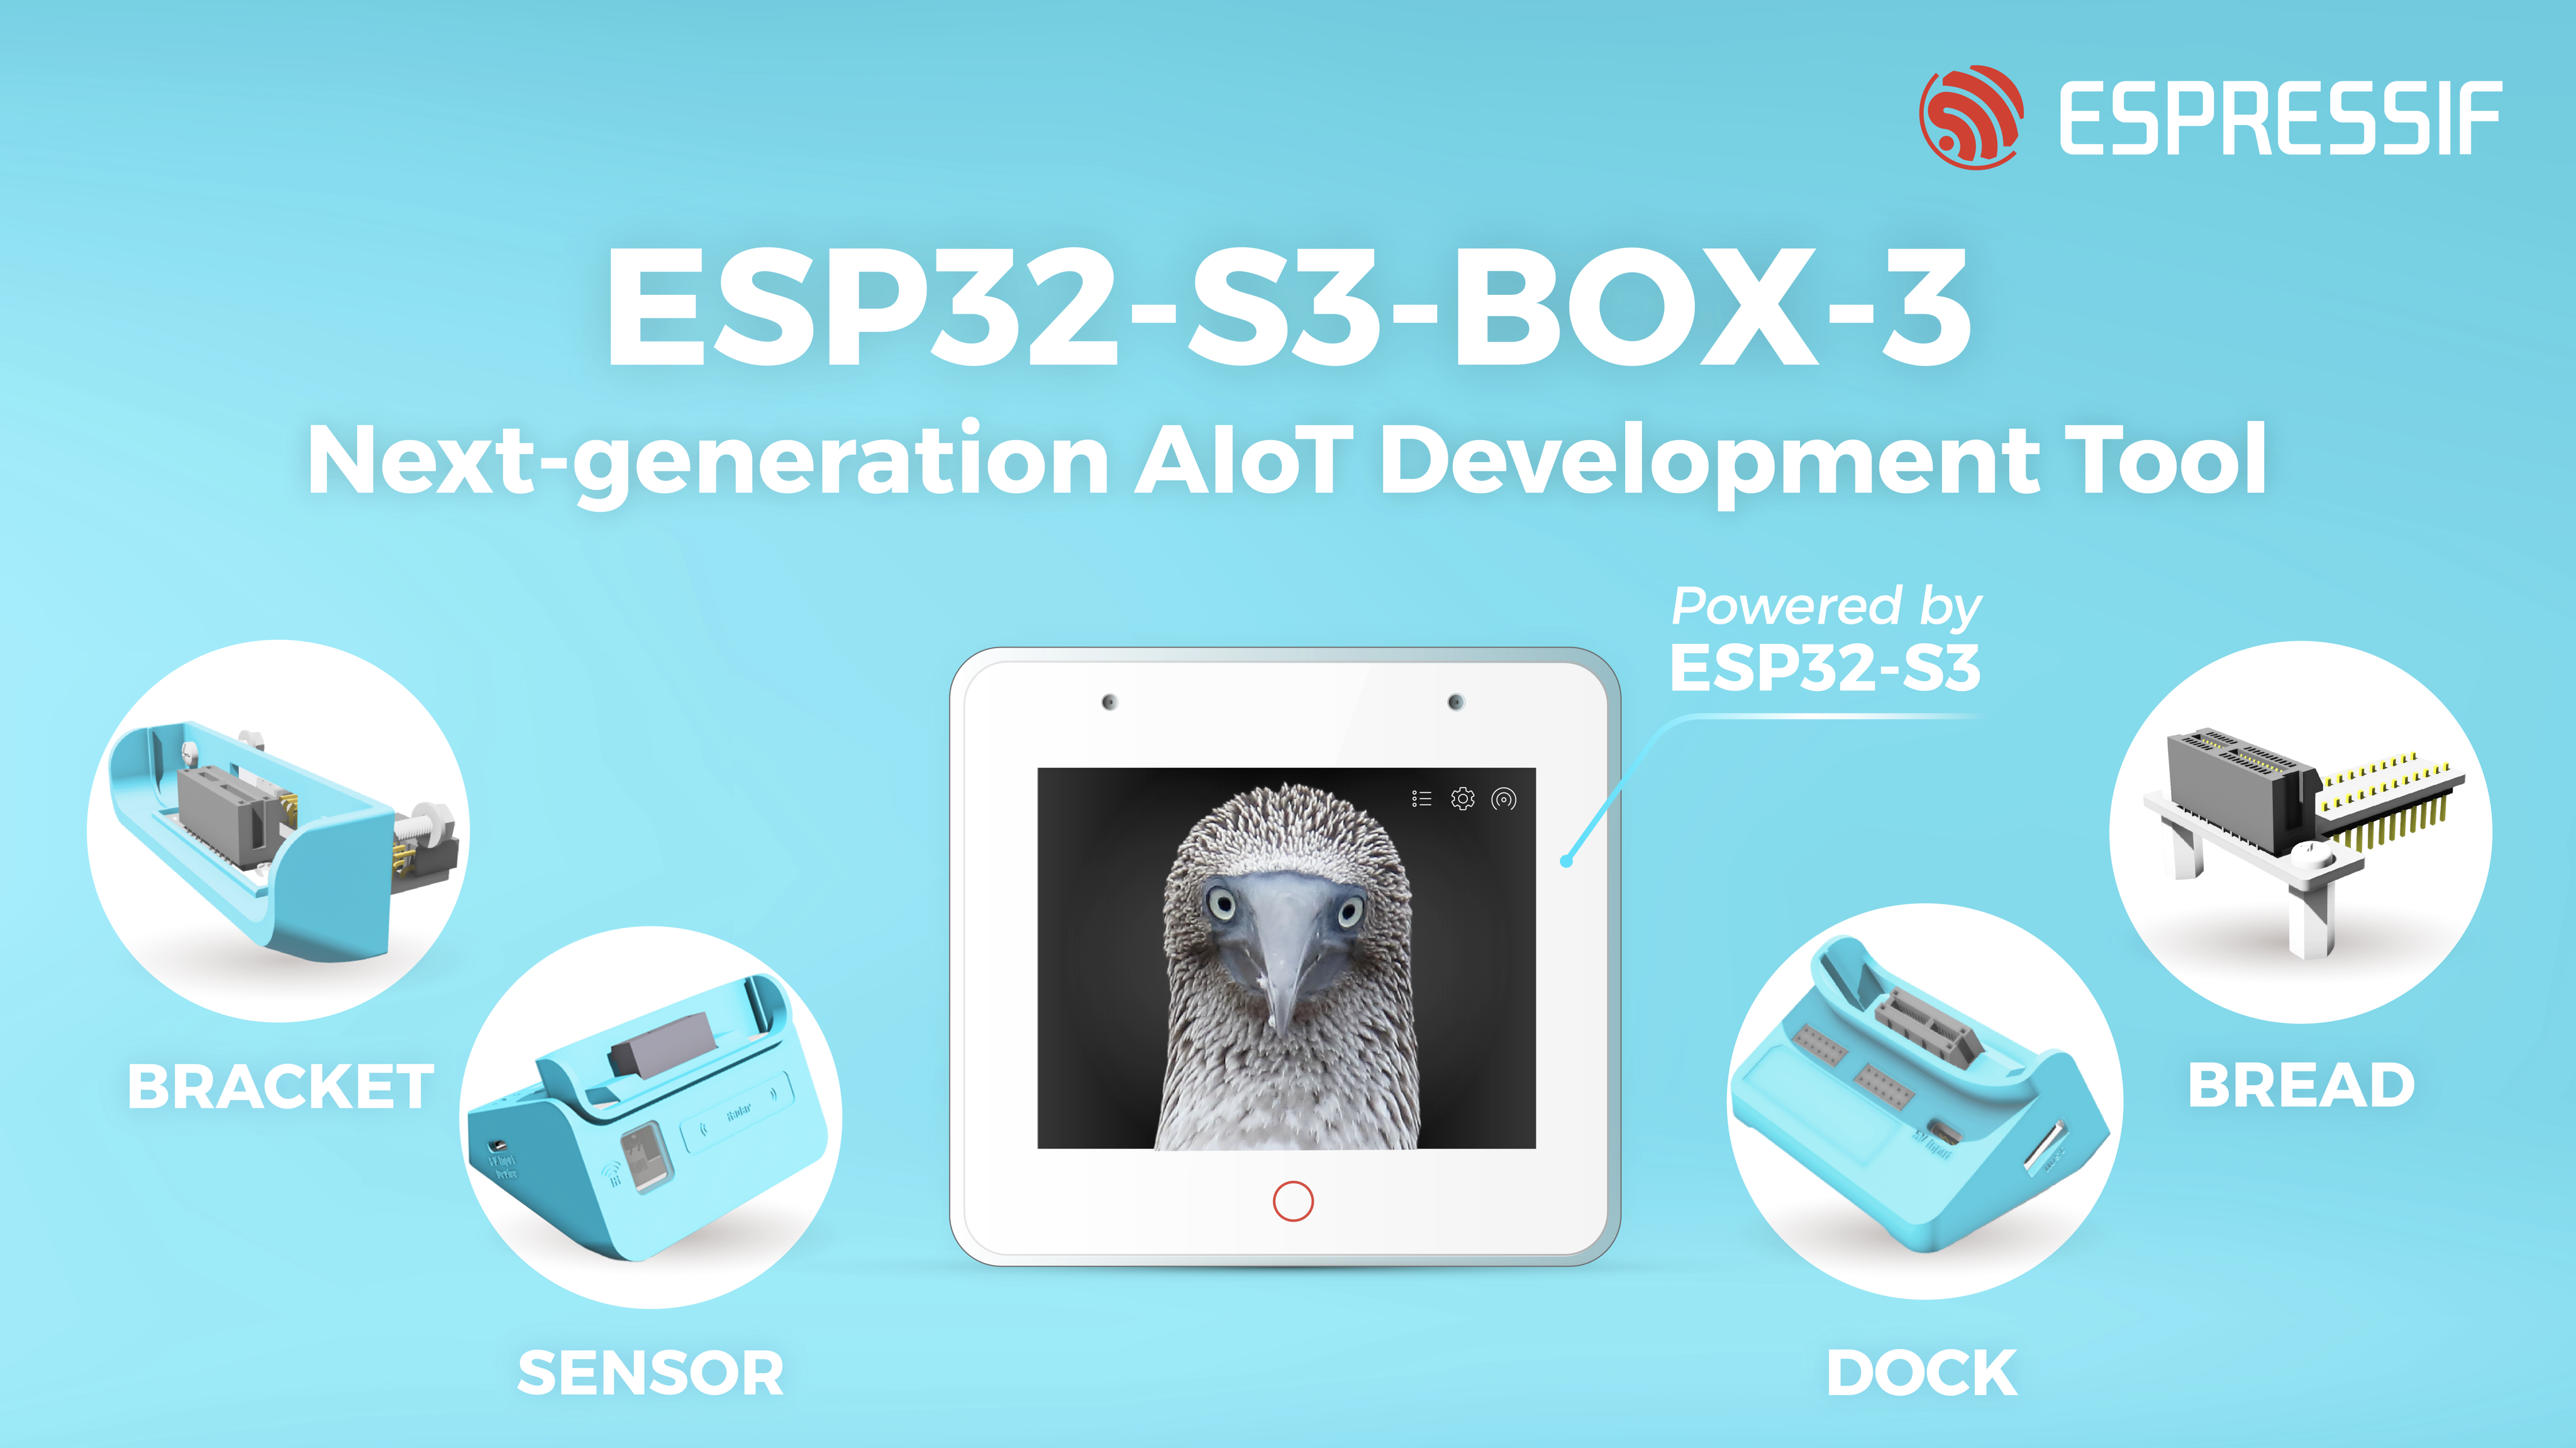 Esp32-S3-Box-3: The Next-Generation Open-Source Aiot Kit